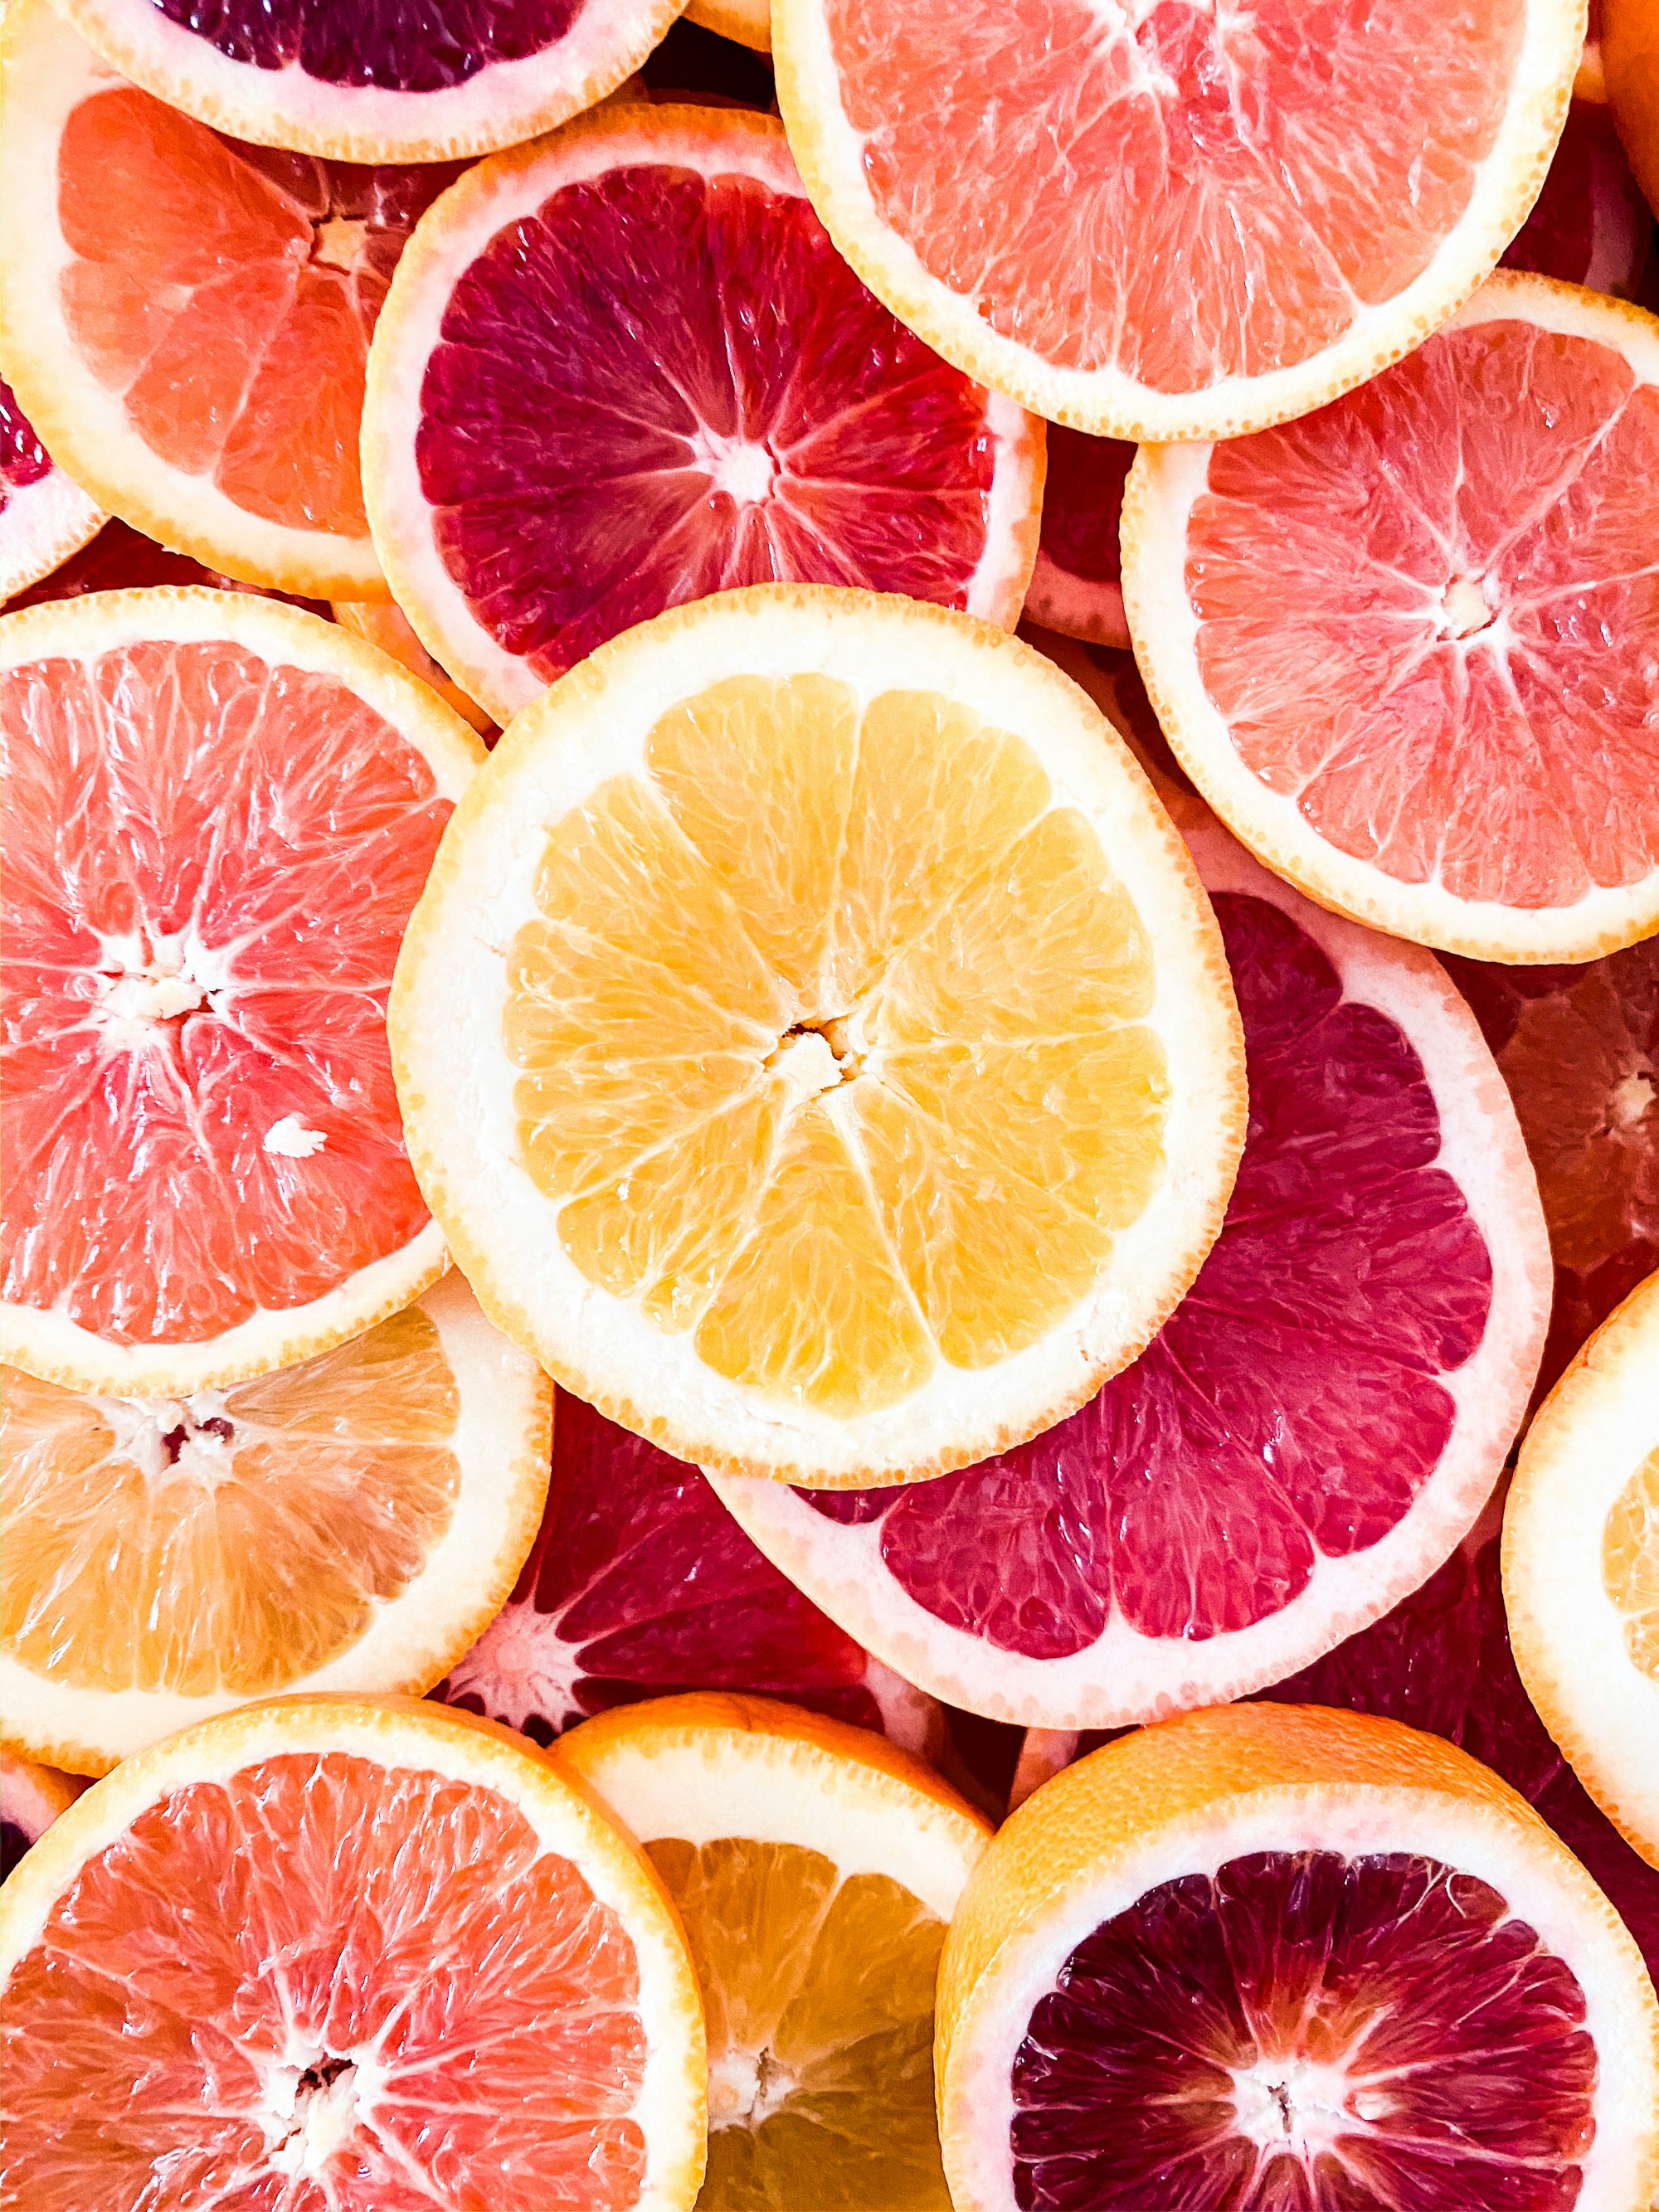 various citrus fruits - citron, orange, grapefruit